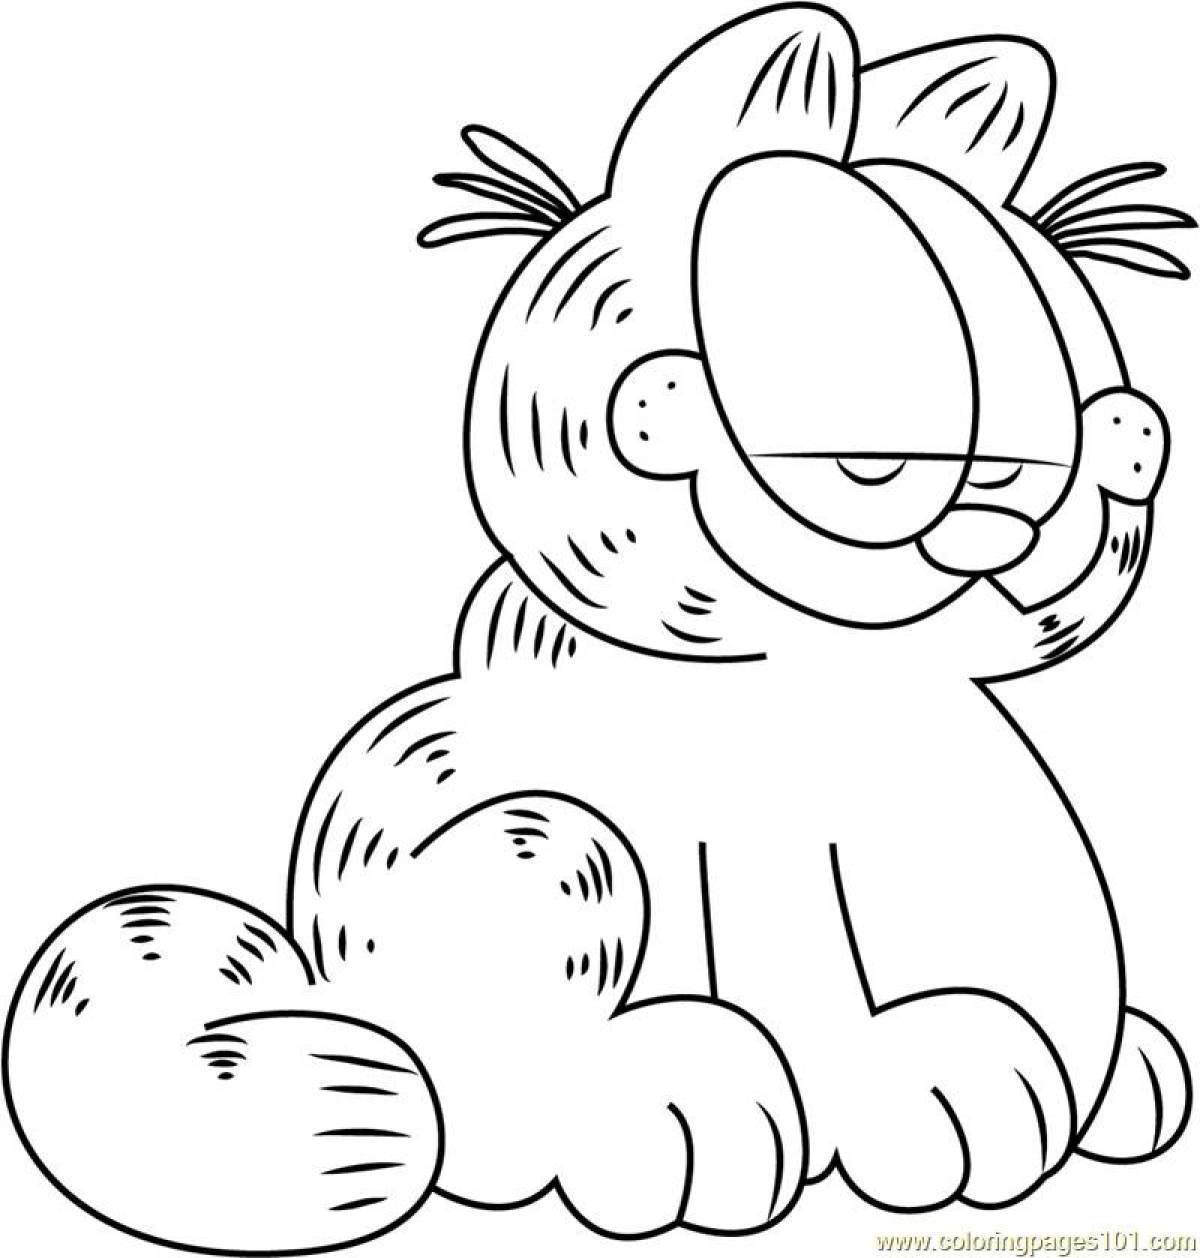 Garfield adorable coloring book